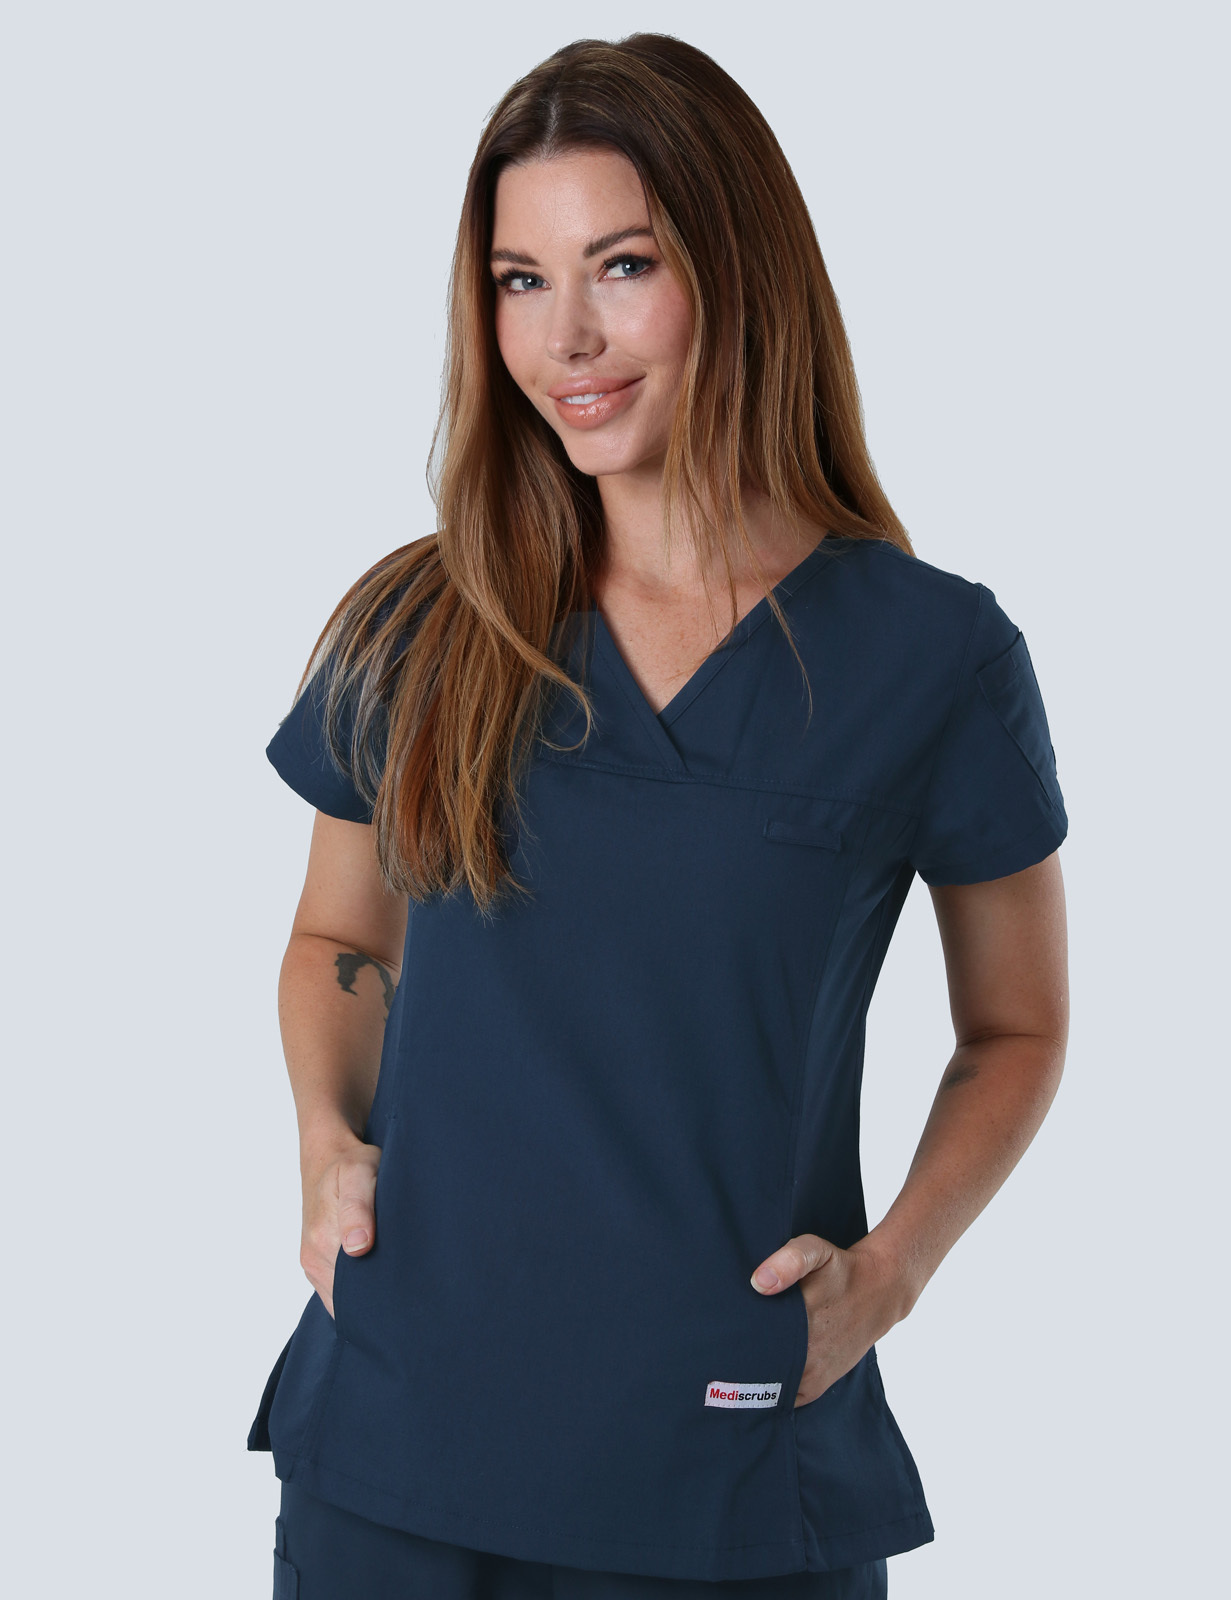 Tweed Health Super Clinic Uniform Set Bundle (Women's Fit Solid Top and Regular Pants in Navy + Logo)